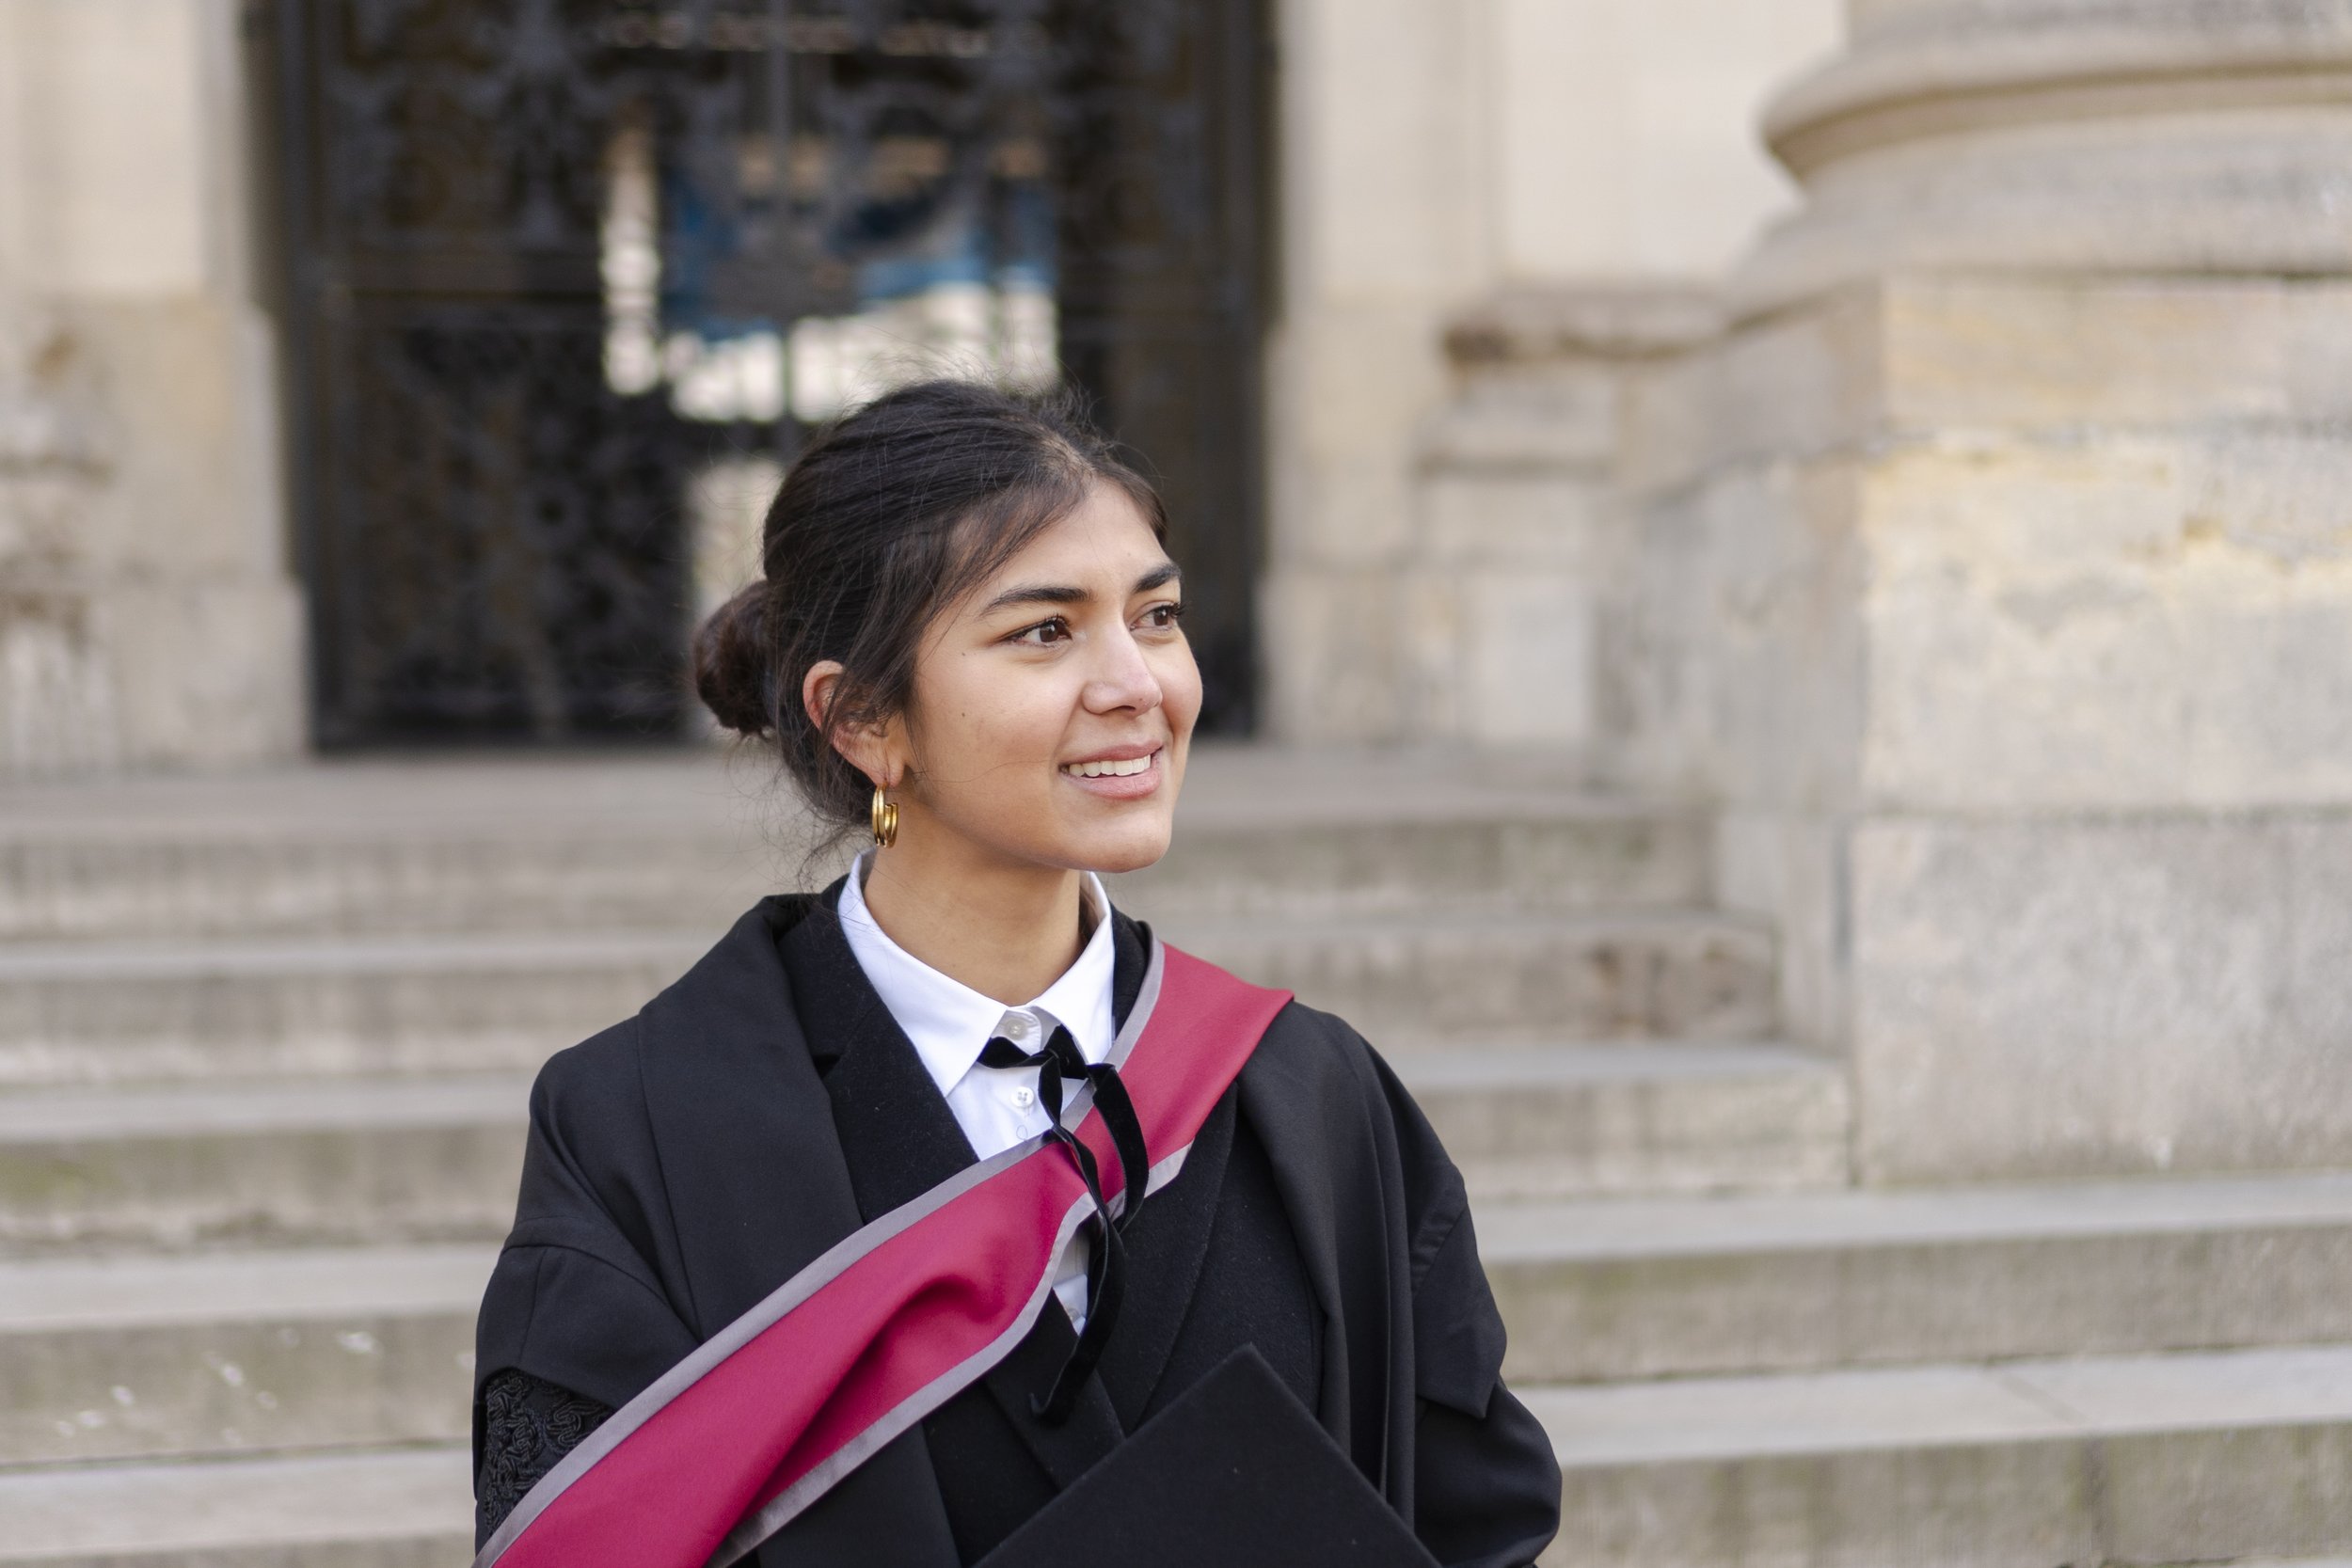 Hafeezah's Univeristy of Oxford Graduation - Jay Anderson Portrait Photography & Film Oxford-69.jpg